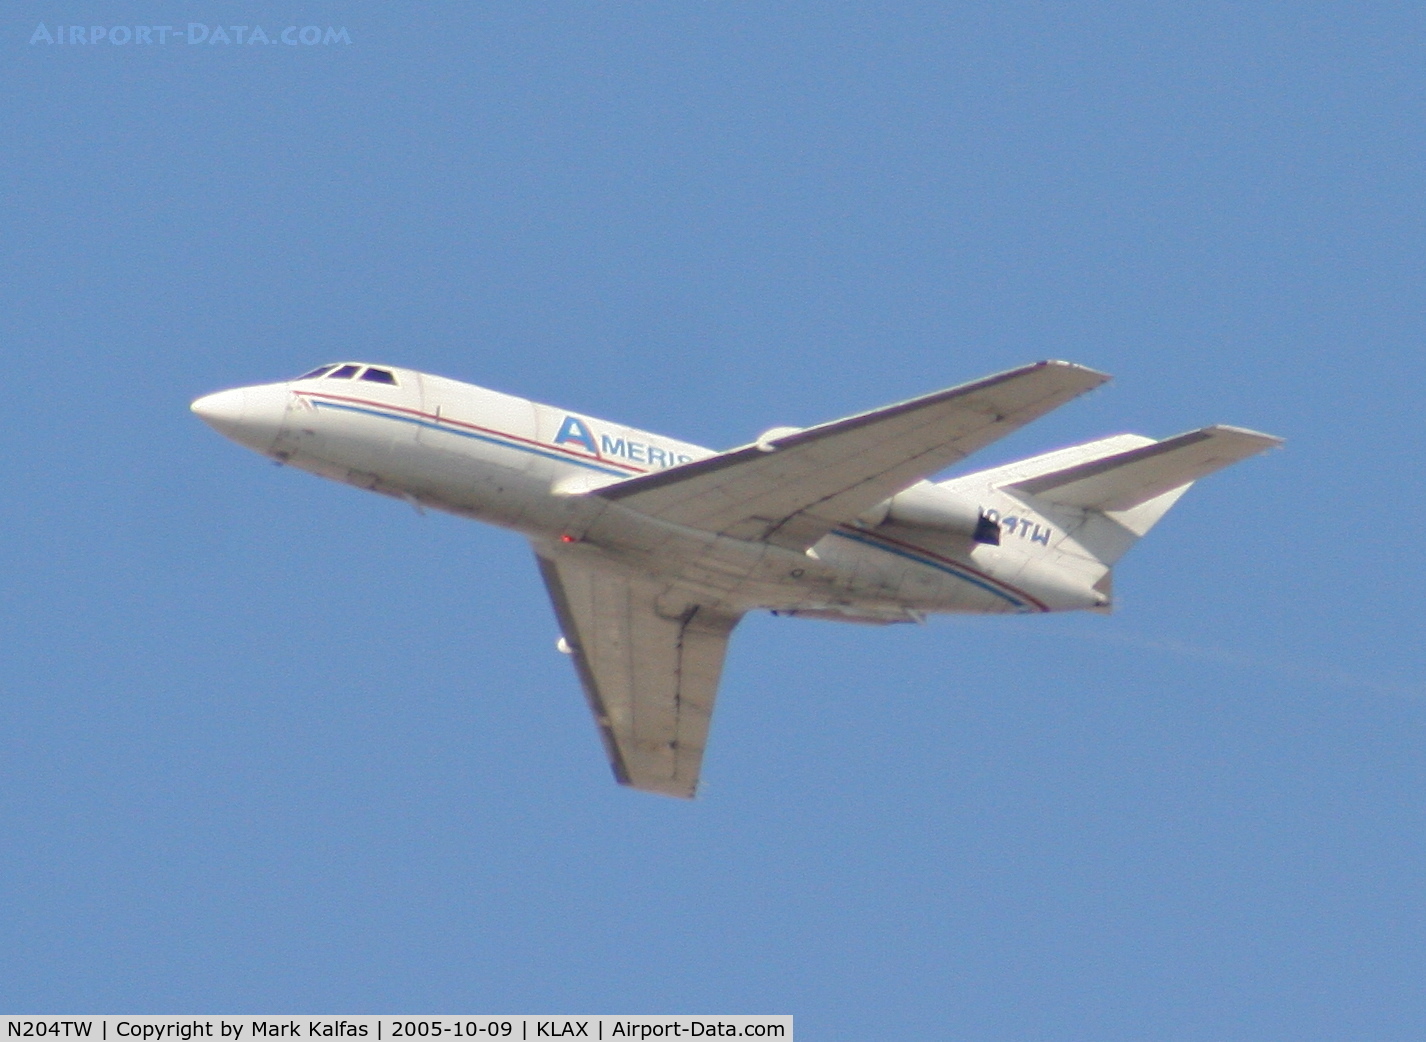 N204TW, 1969 Dassault Falcon (Mystere) 20D C/N 204, Ameristar Falcon 20DC, with a fuel leak on #2 departing 25L KLAX.